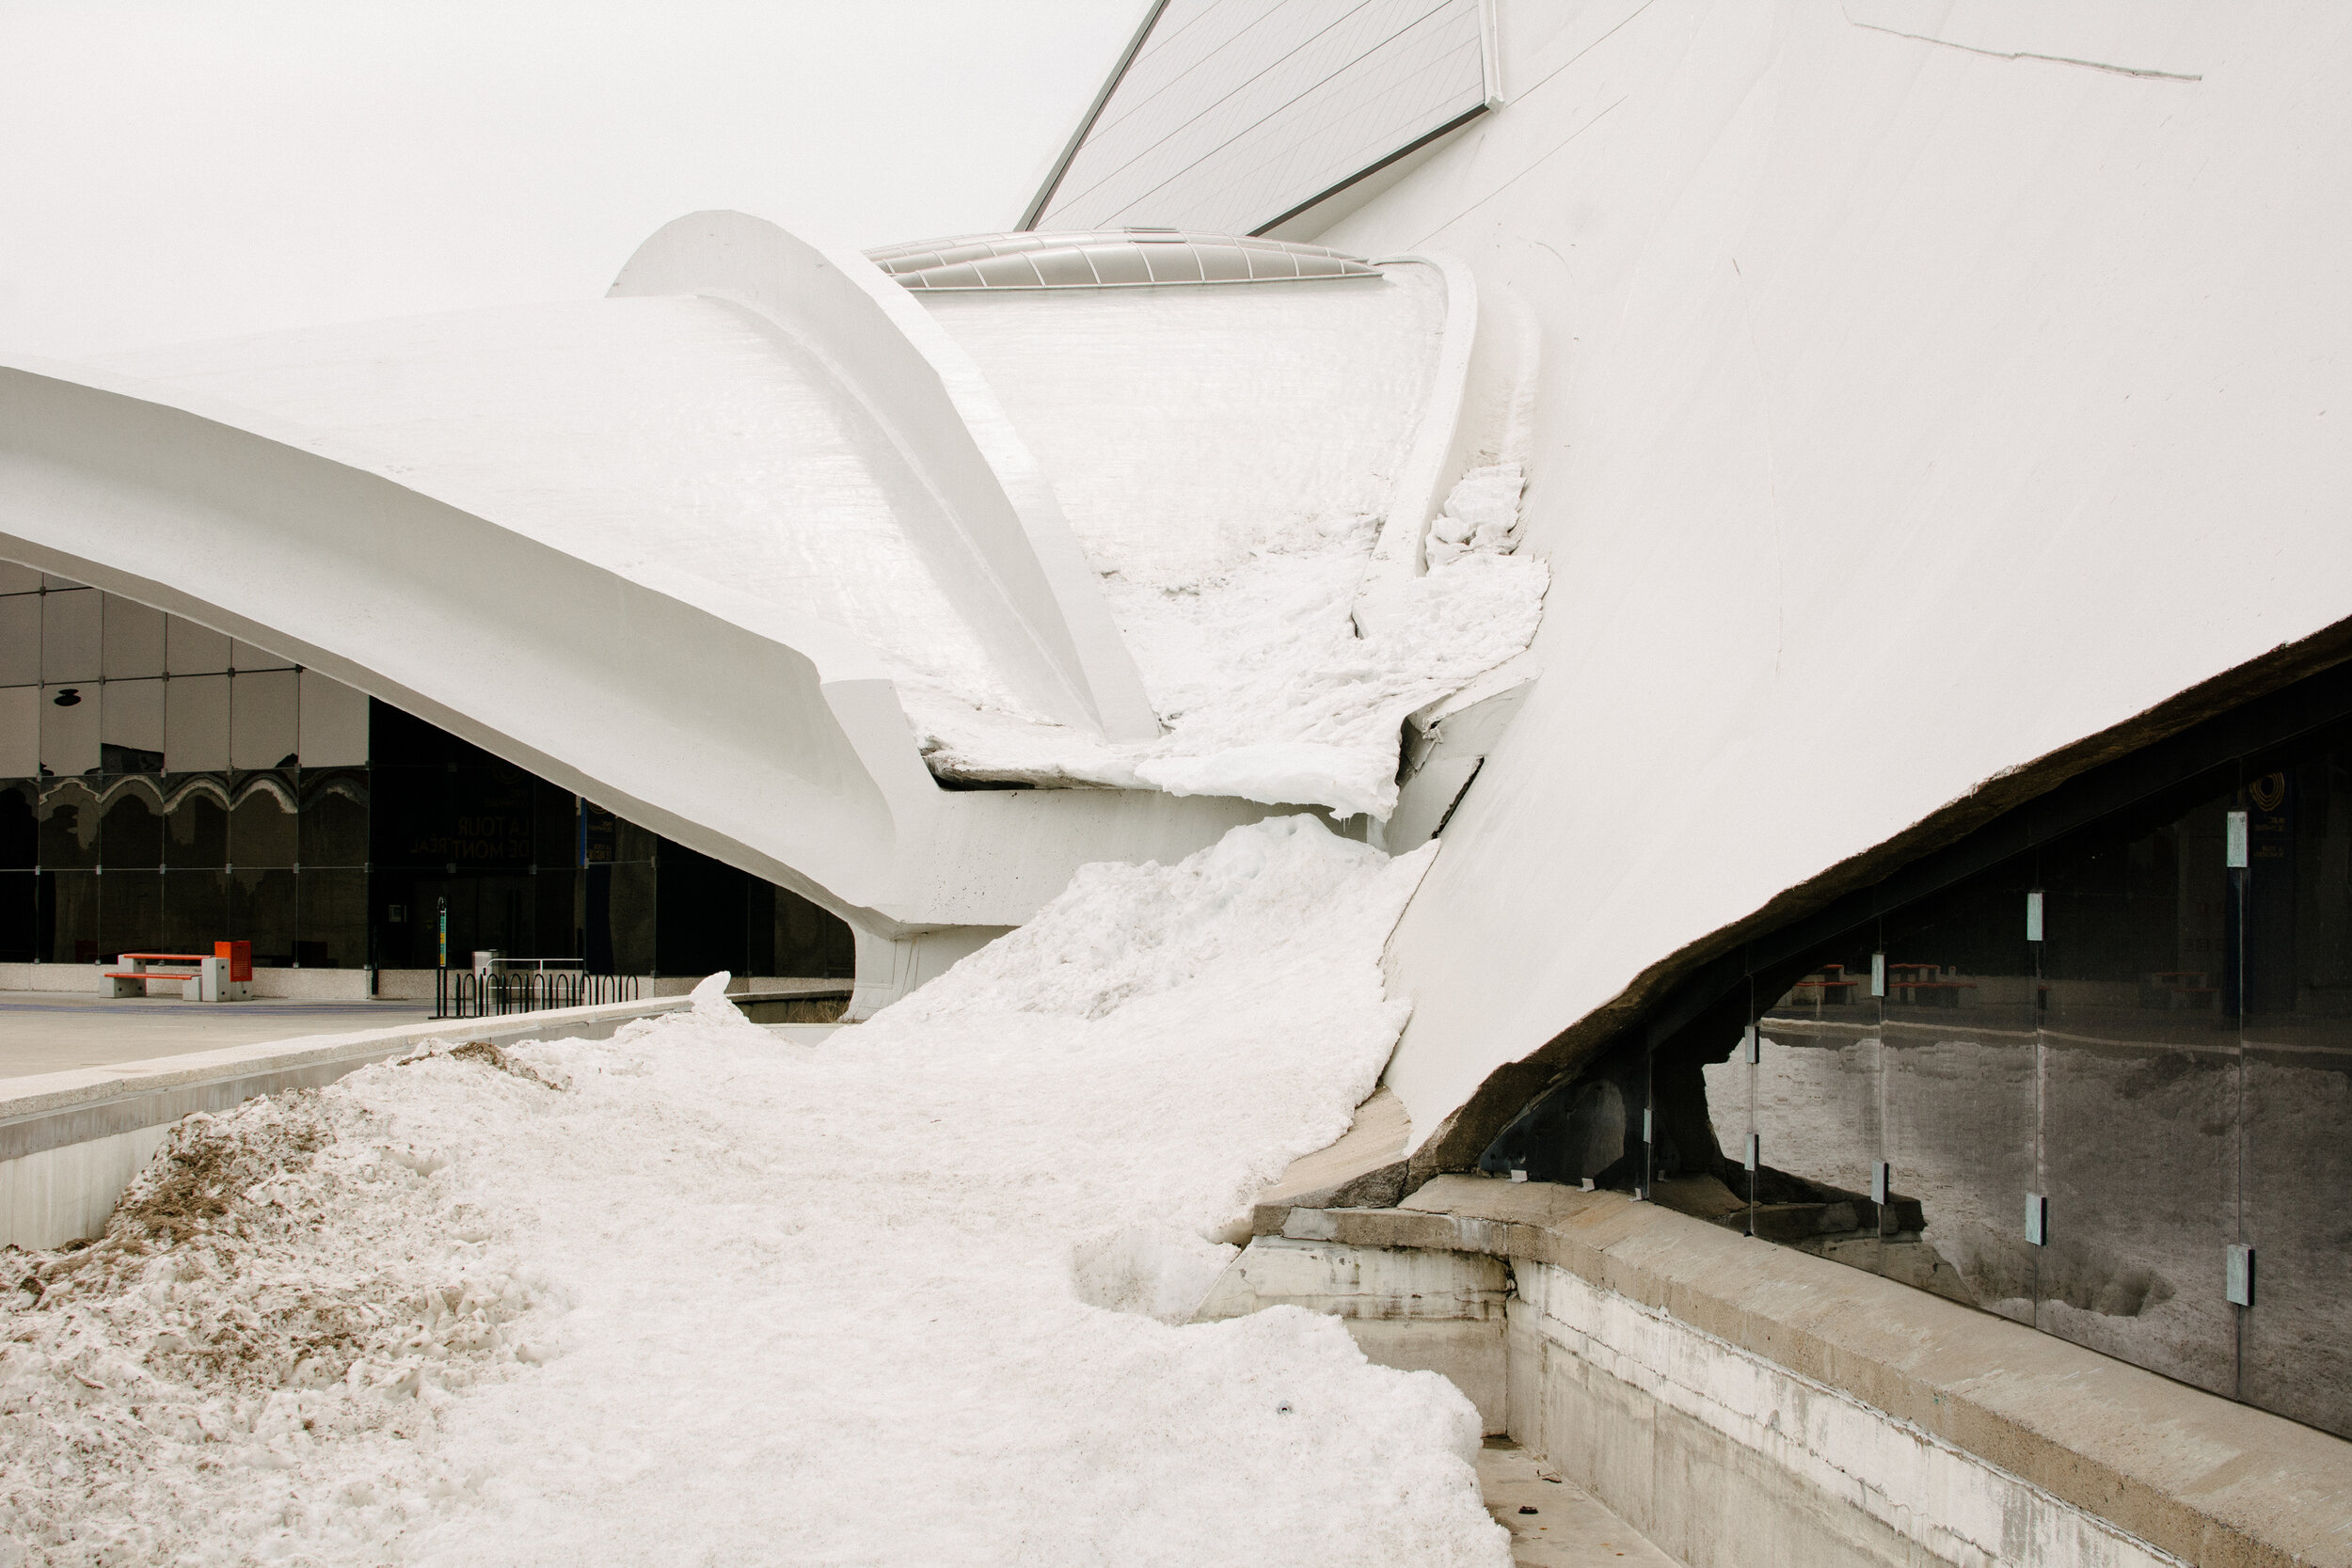 20200328_photo_neige-descendant-gouttieres-stade-olympique-photographe-documentaire-a-montreal-architecture-007.jpg